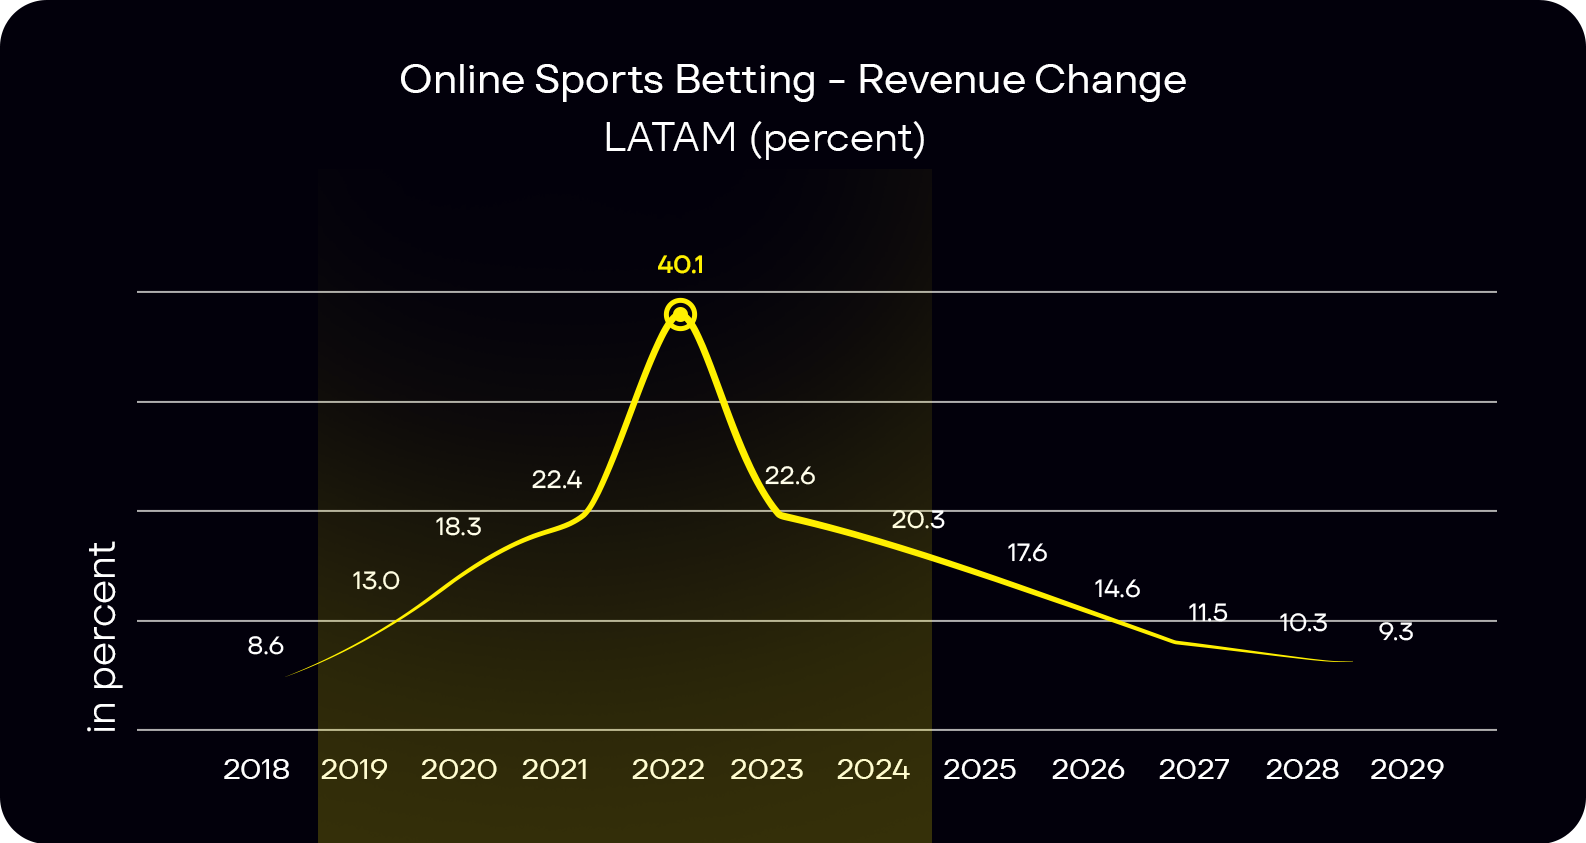 online sports betting revenue change in Latin America